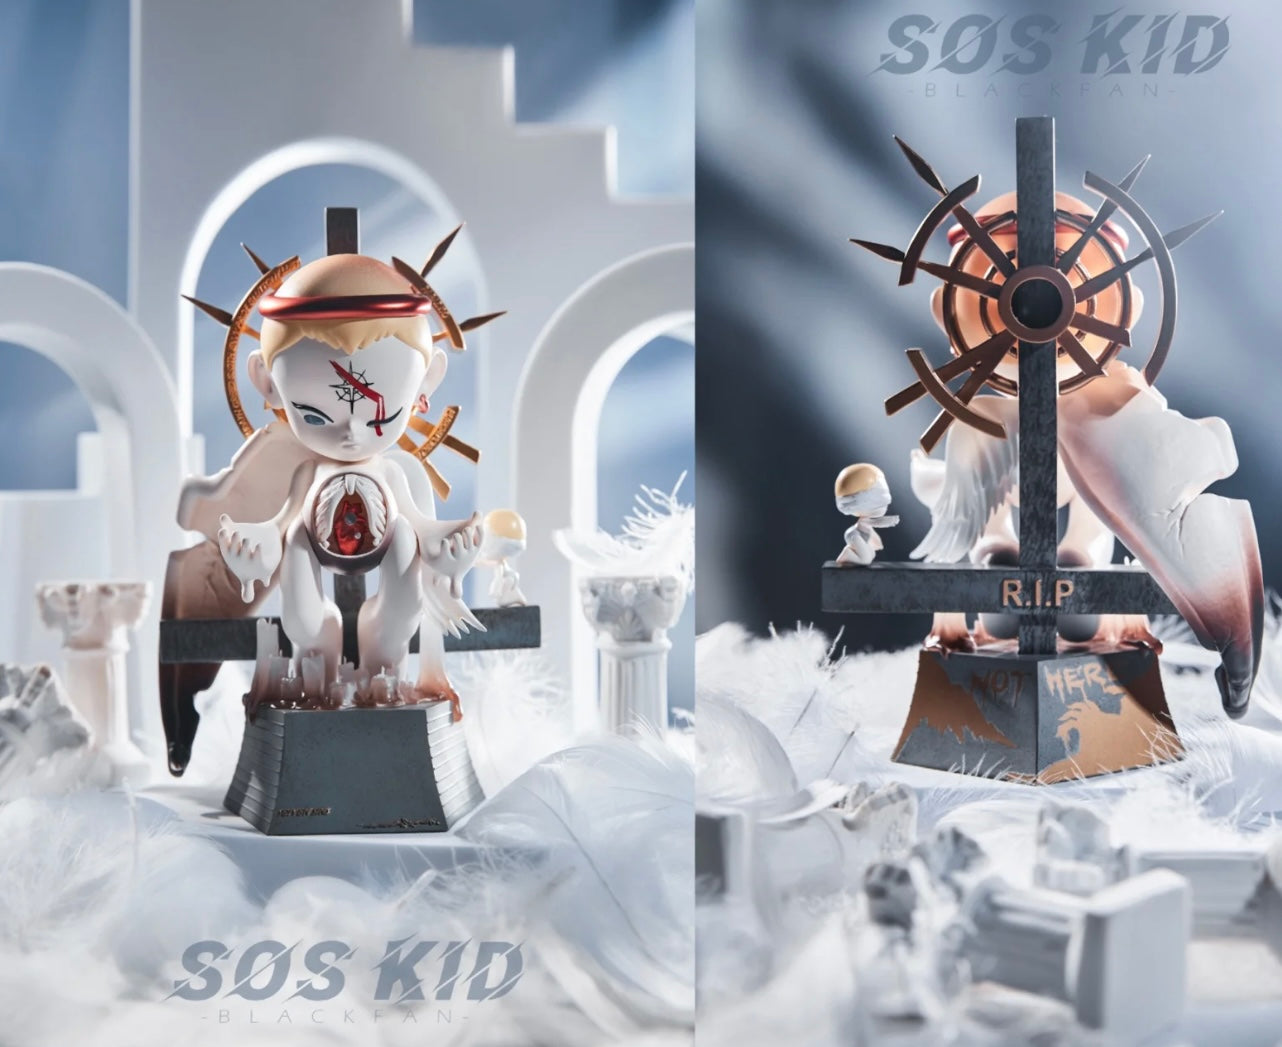 [FUNFORFUN] SOS KID - "Angel" Art Toy